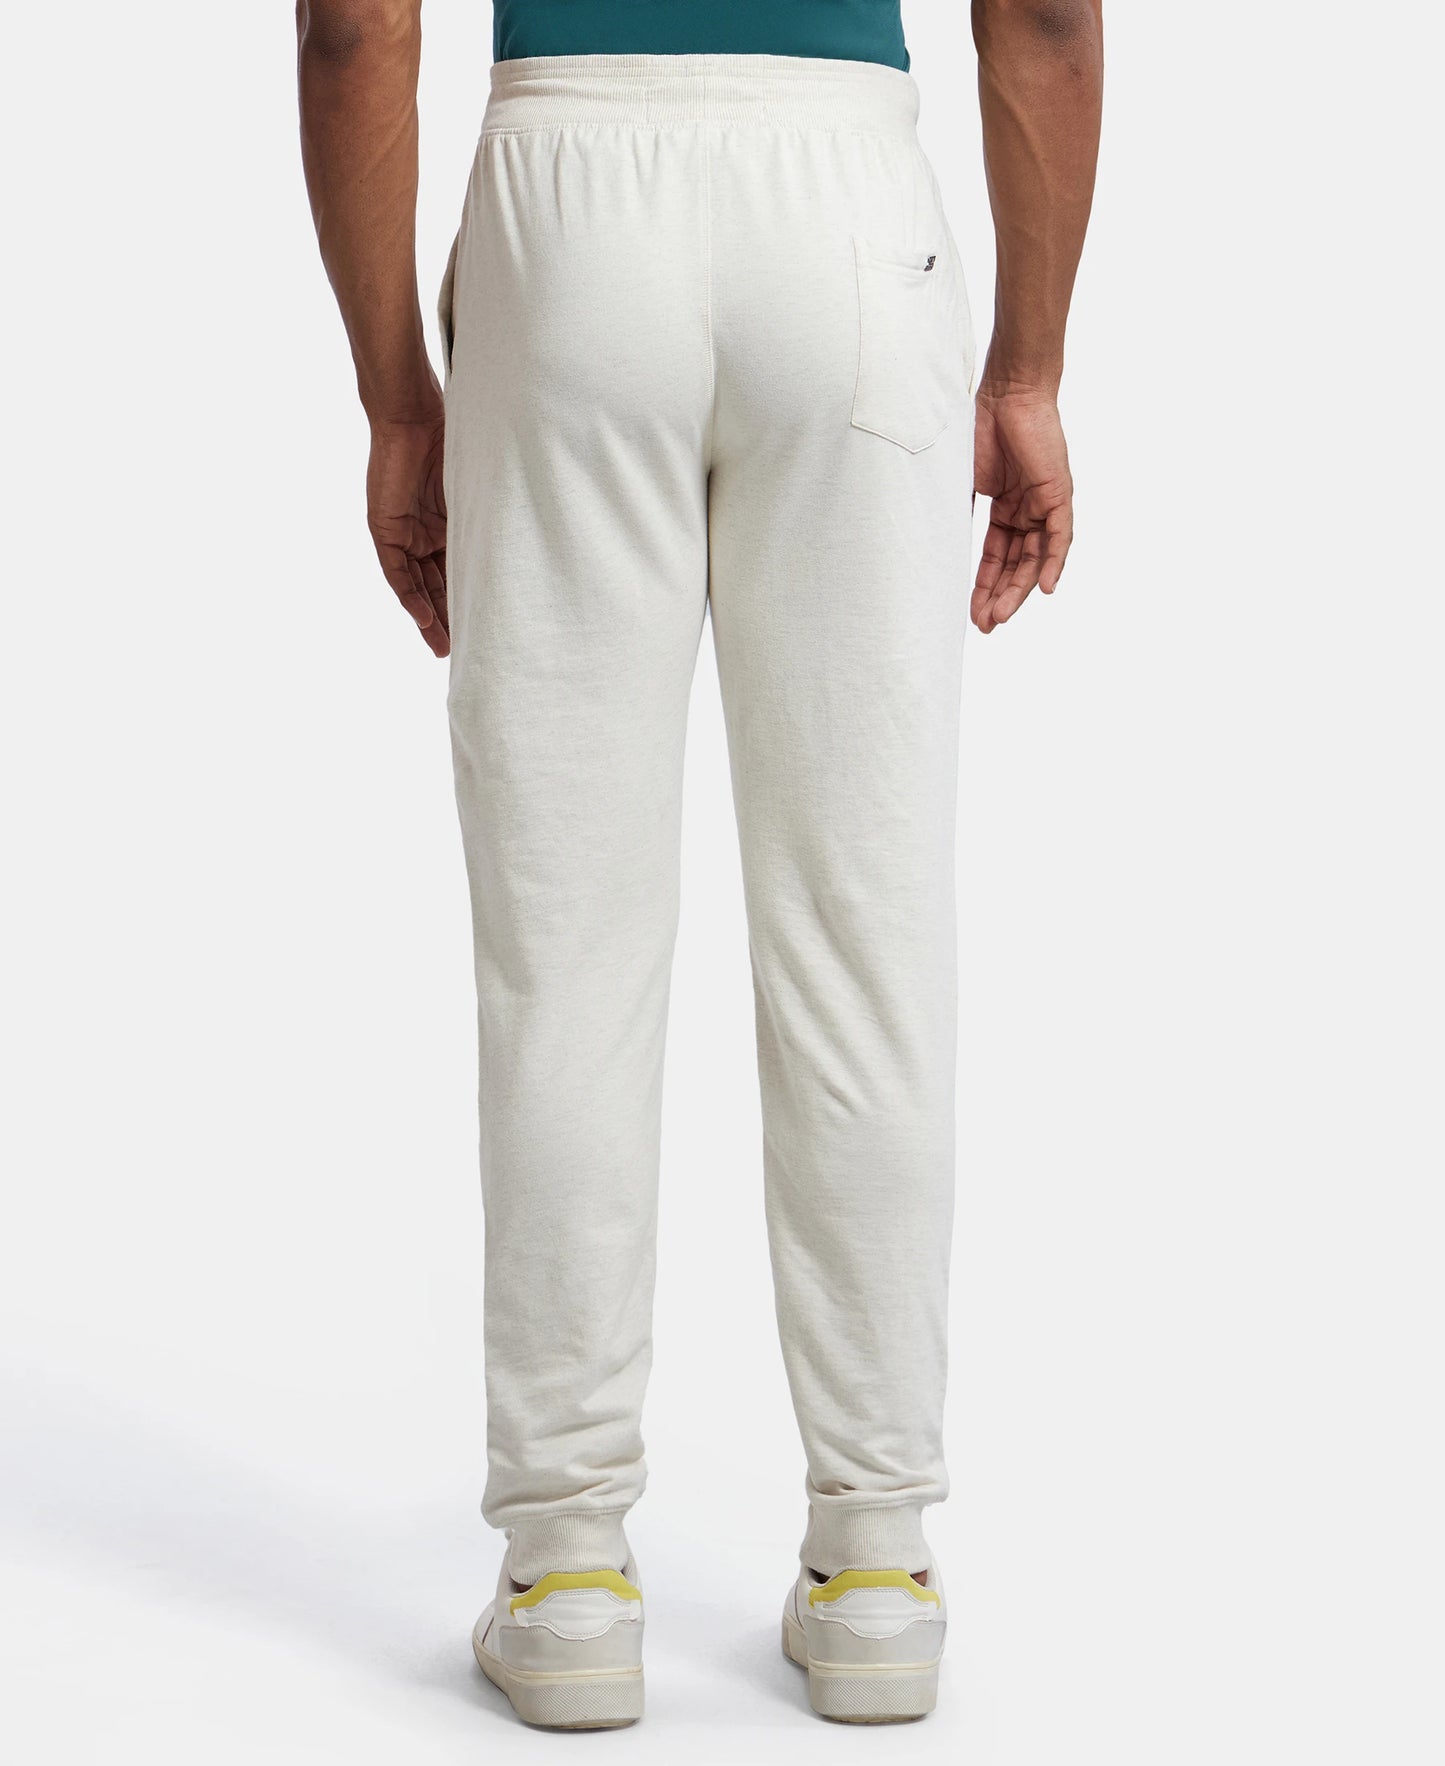 Super Combed Cotton Rich Slim Fit Jogger with Side Pockets - Cream Melange-3